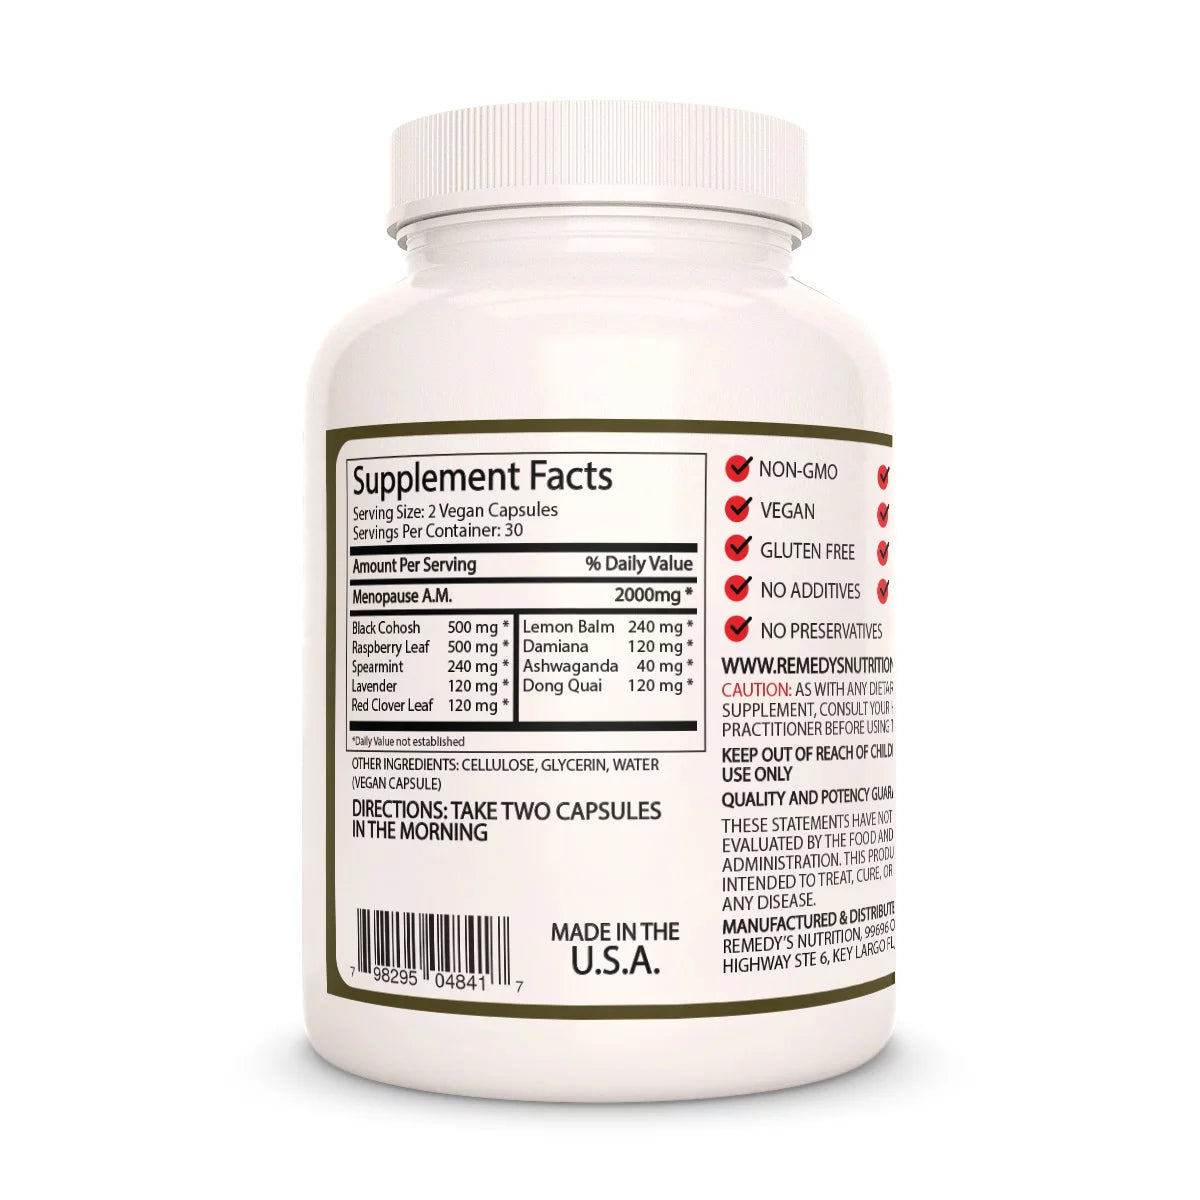 Image of Remedy's Nutrition® Menopause A.M.™ back bottle label. Supplement Facts Ingredients Lavender, Red Clover, Lemon Balm